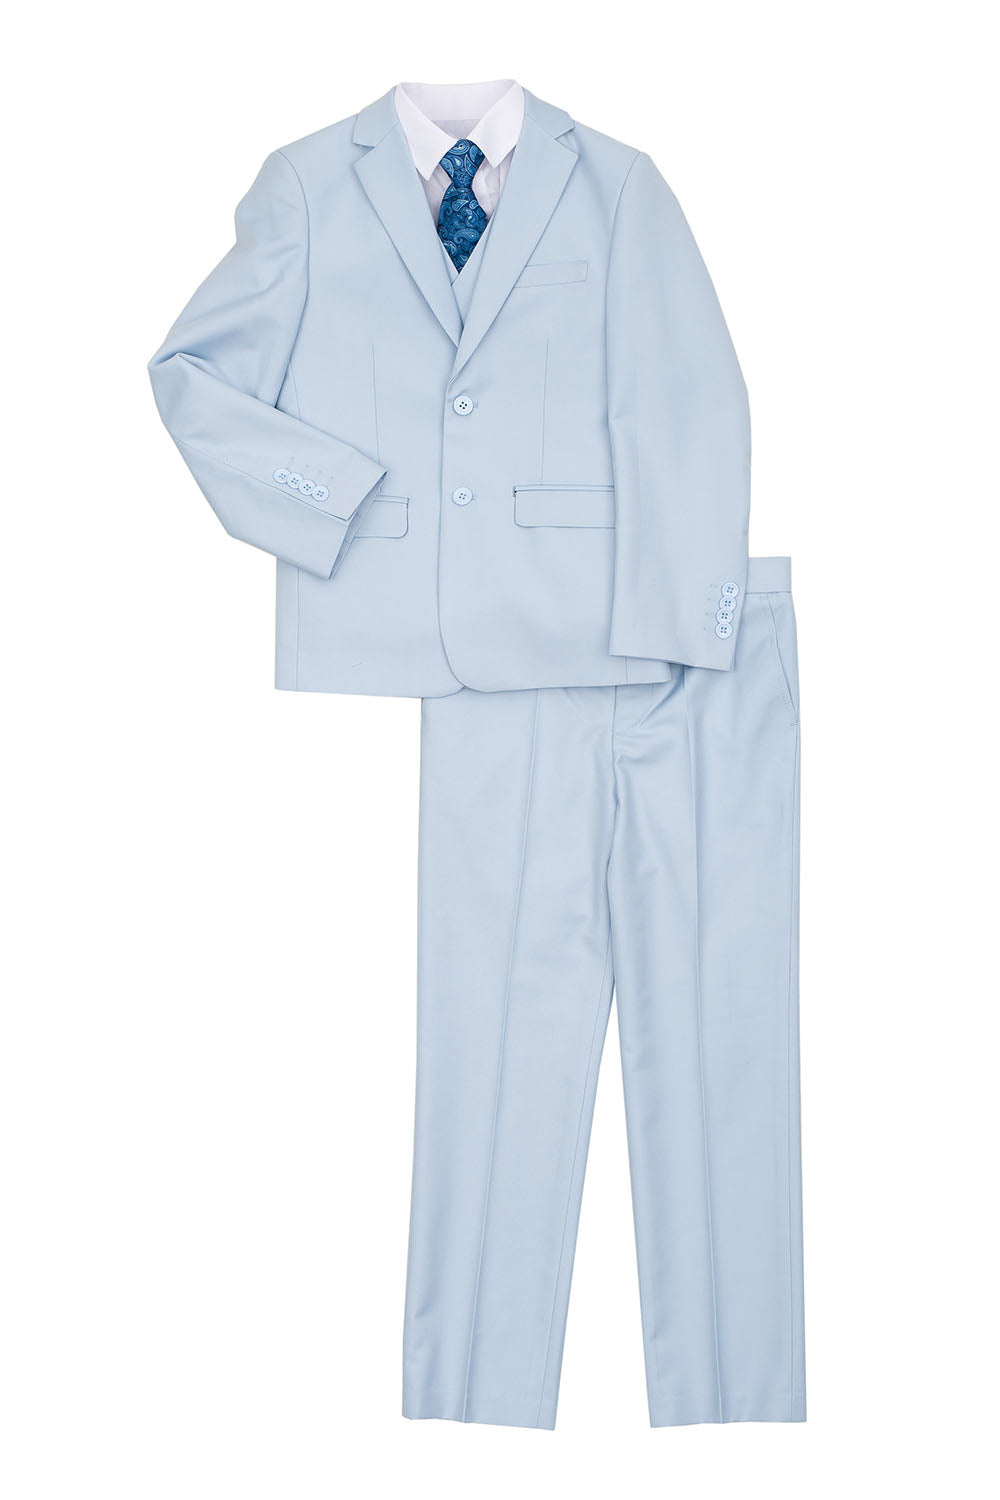 "Austin" Kids Light Blue 5-Piece Suit (Geoffrey Beene / AXNY)